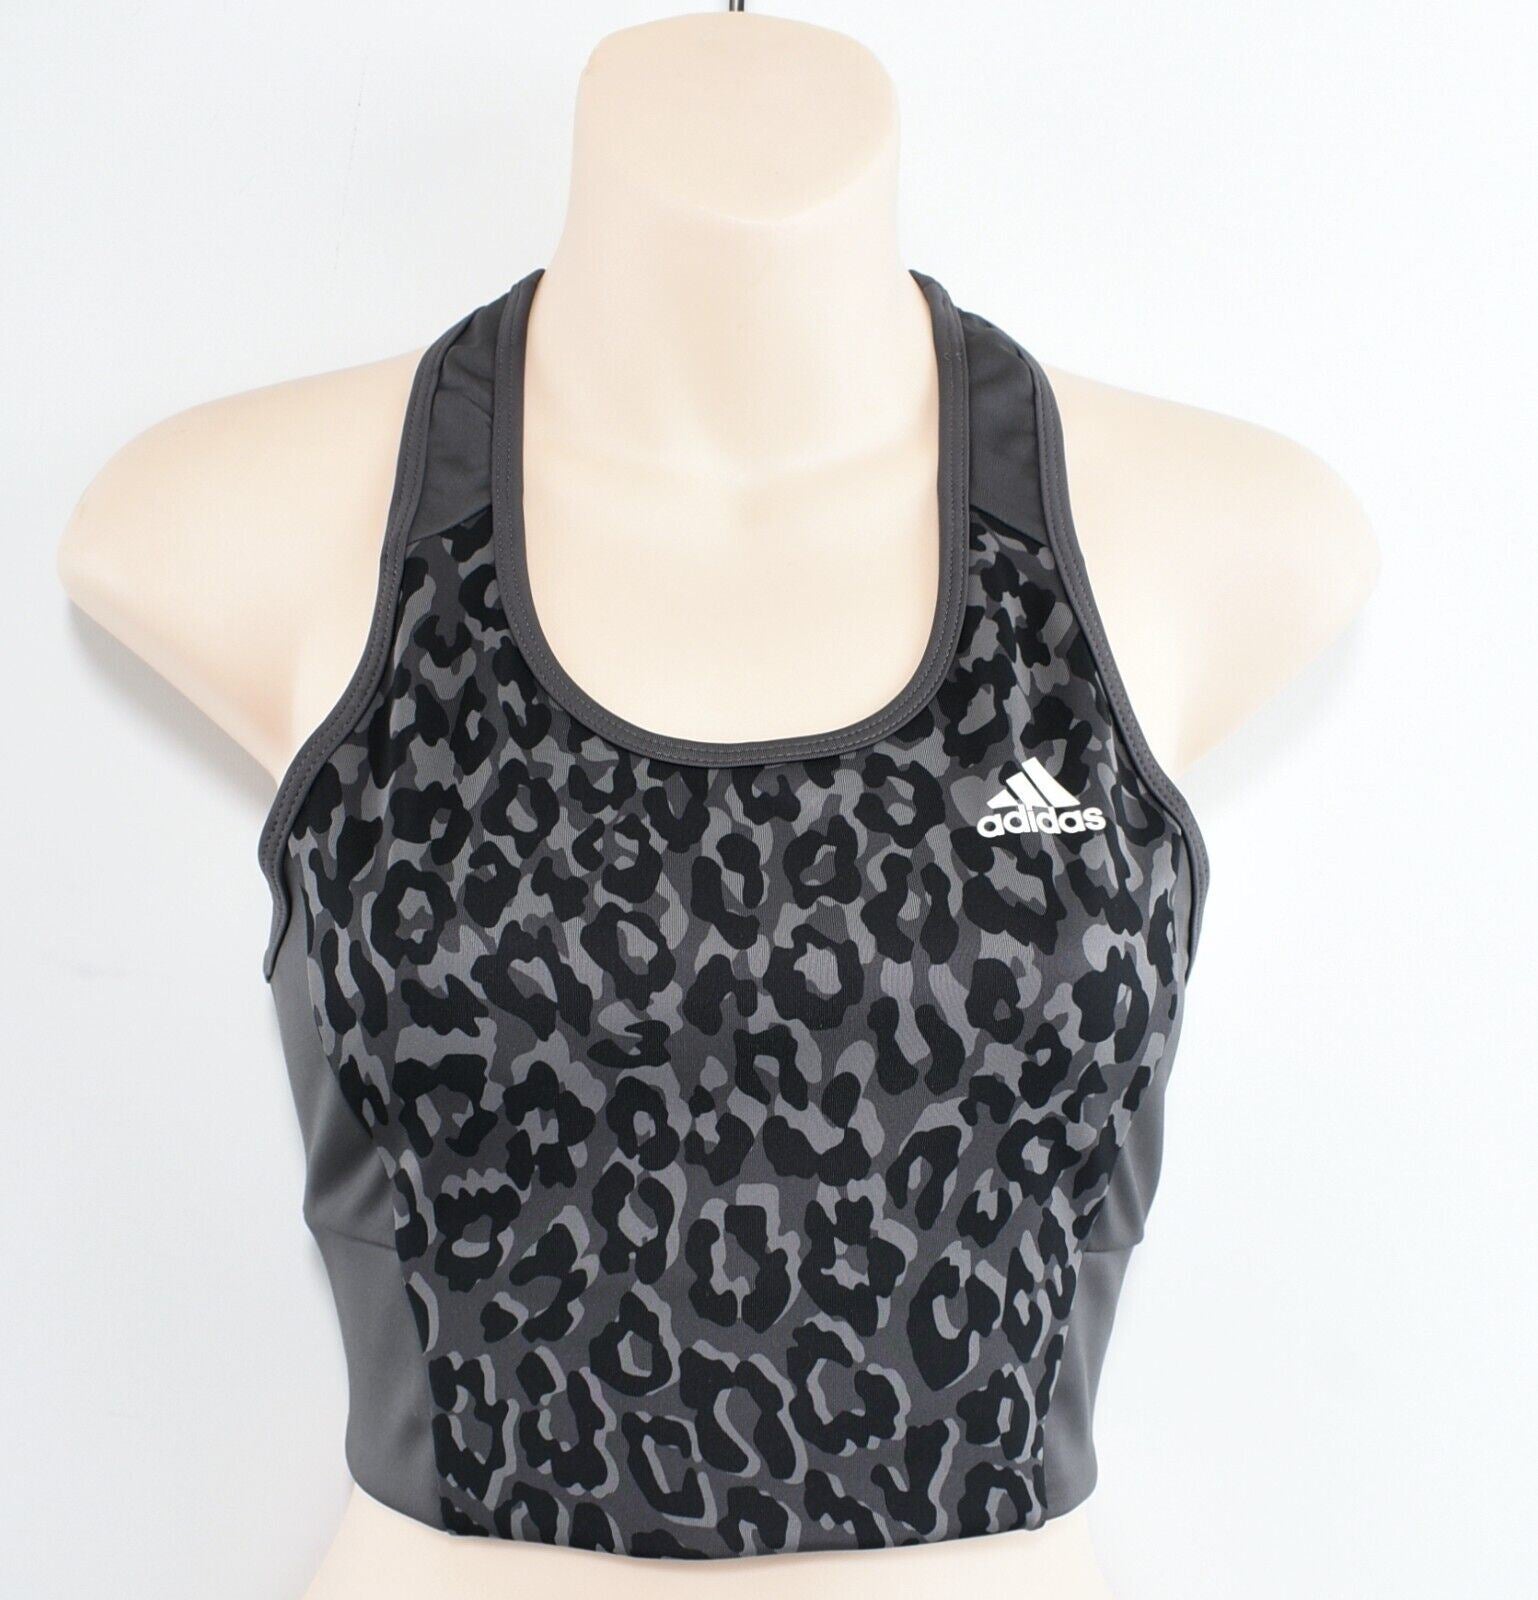 ADIDAS Women's Workout Gym Bra Top, Black/Grey Leopard Print, size S /UK 8-10